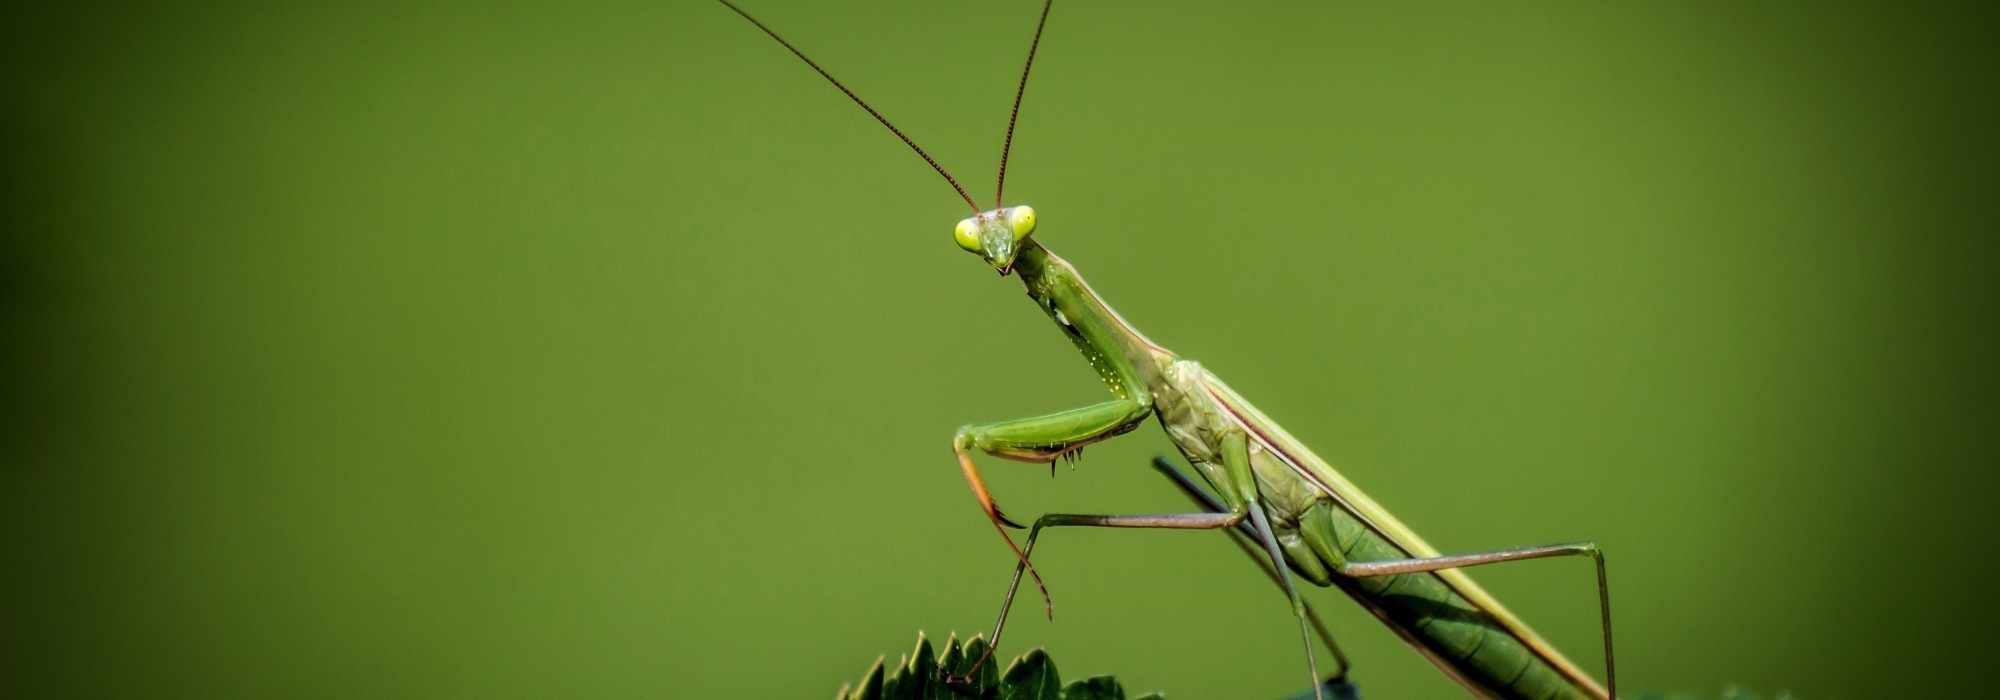 Mante religieuse - Mantis religiosa : quel est cet insecte ?